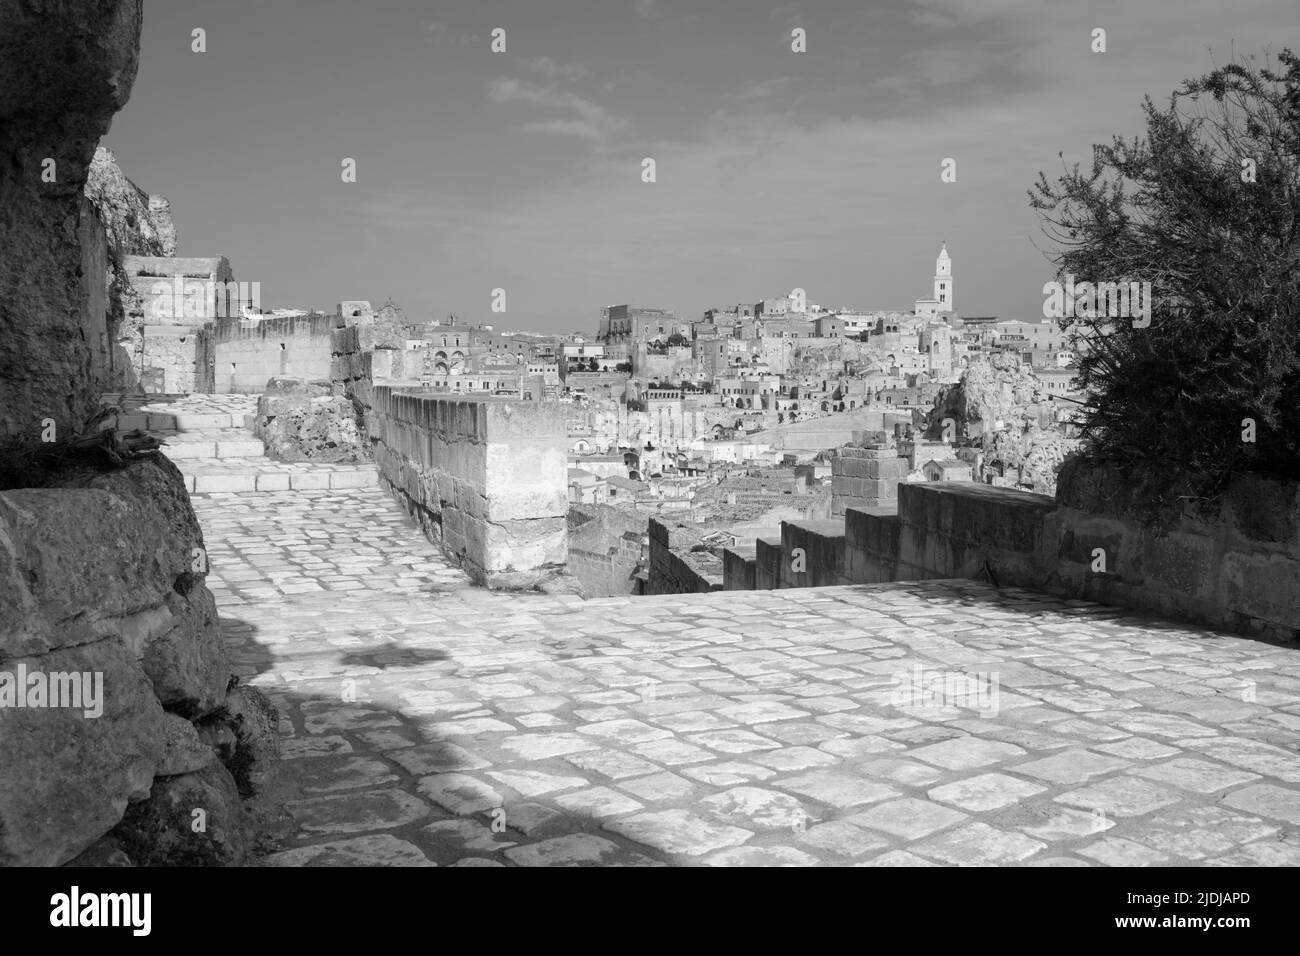 Matera - El paisaje urbano del casco antiguo. Foto de stock